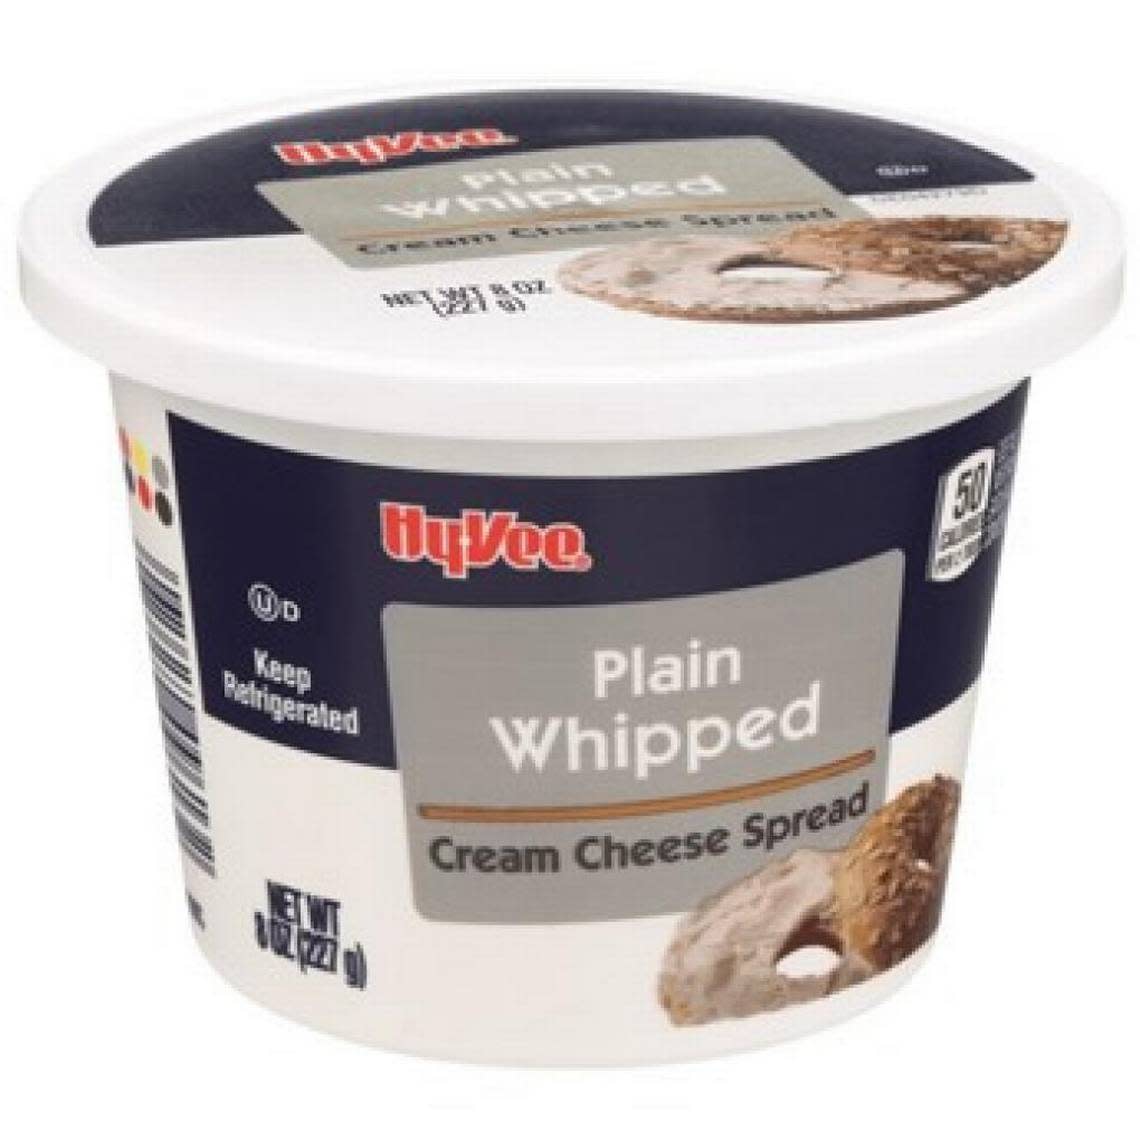 Hy-Vee Plain Whipped Cream Cheese Spread FDA